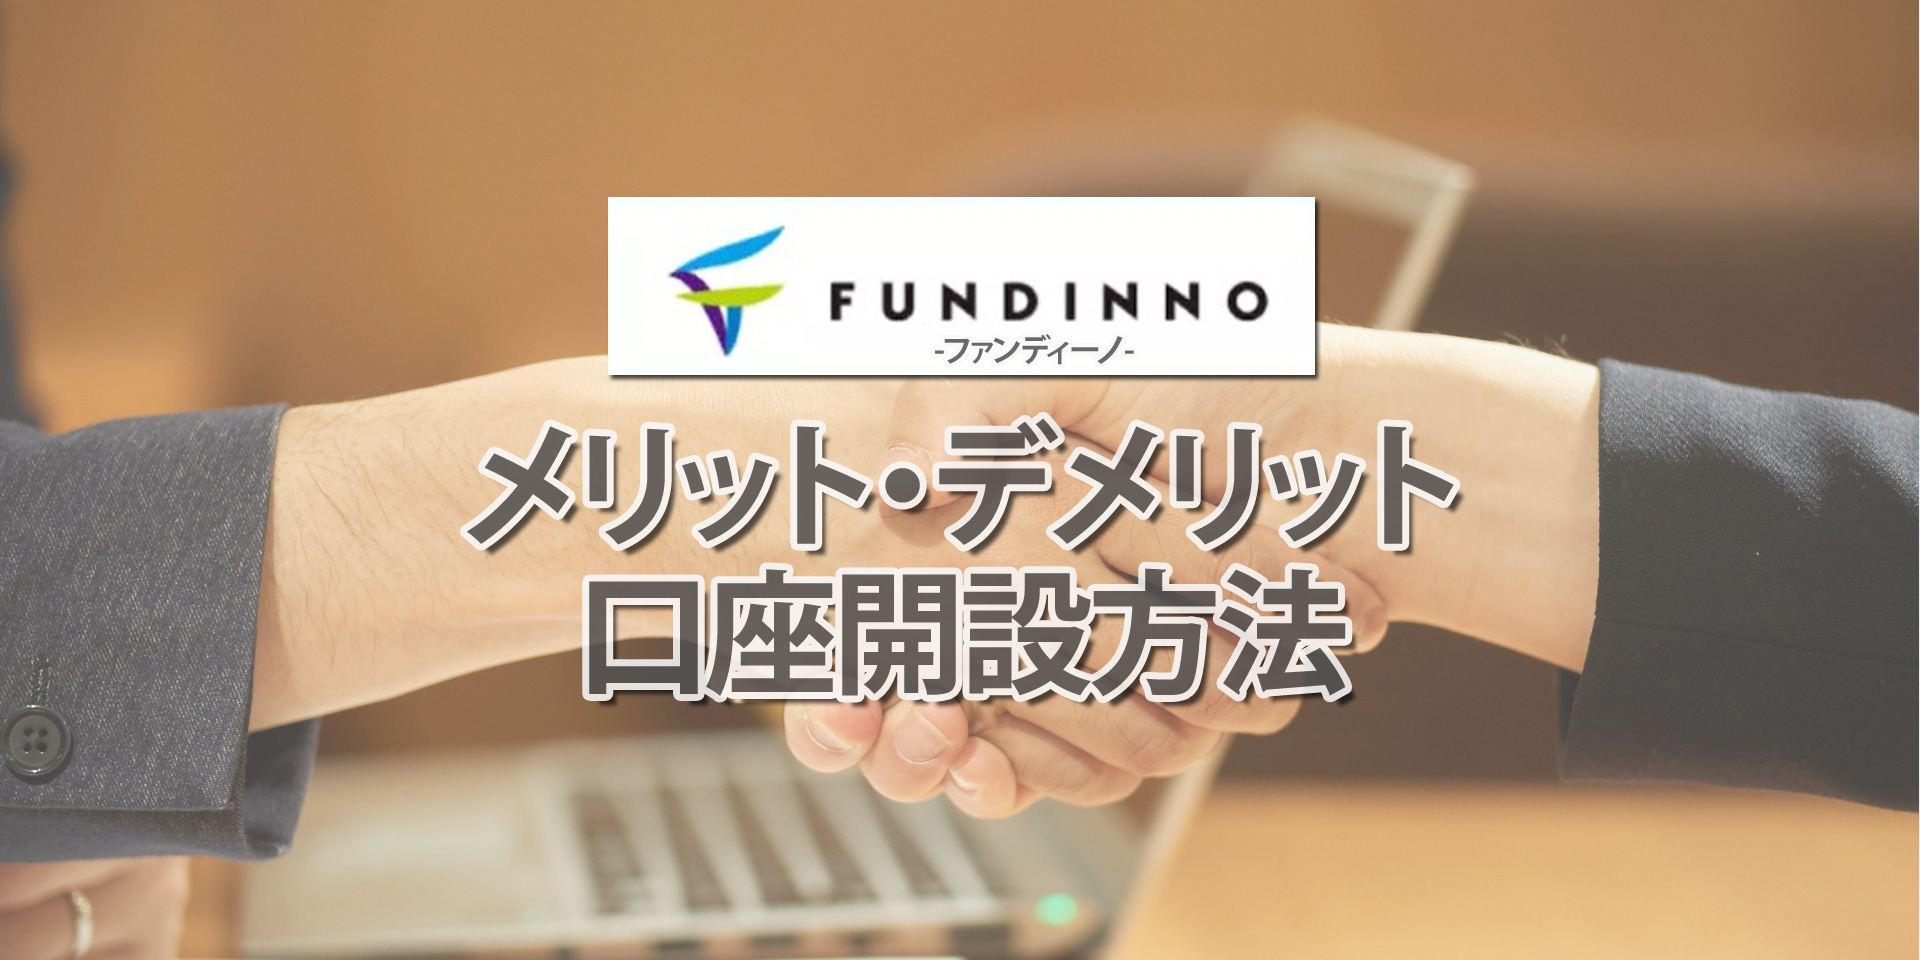 FUNDINNO(ファンディーノ)とは？特徴やメリット・デメリット、口座開設方法などを解説！